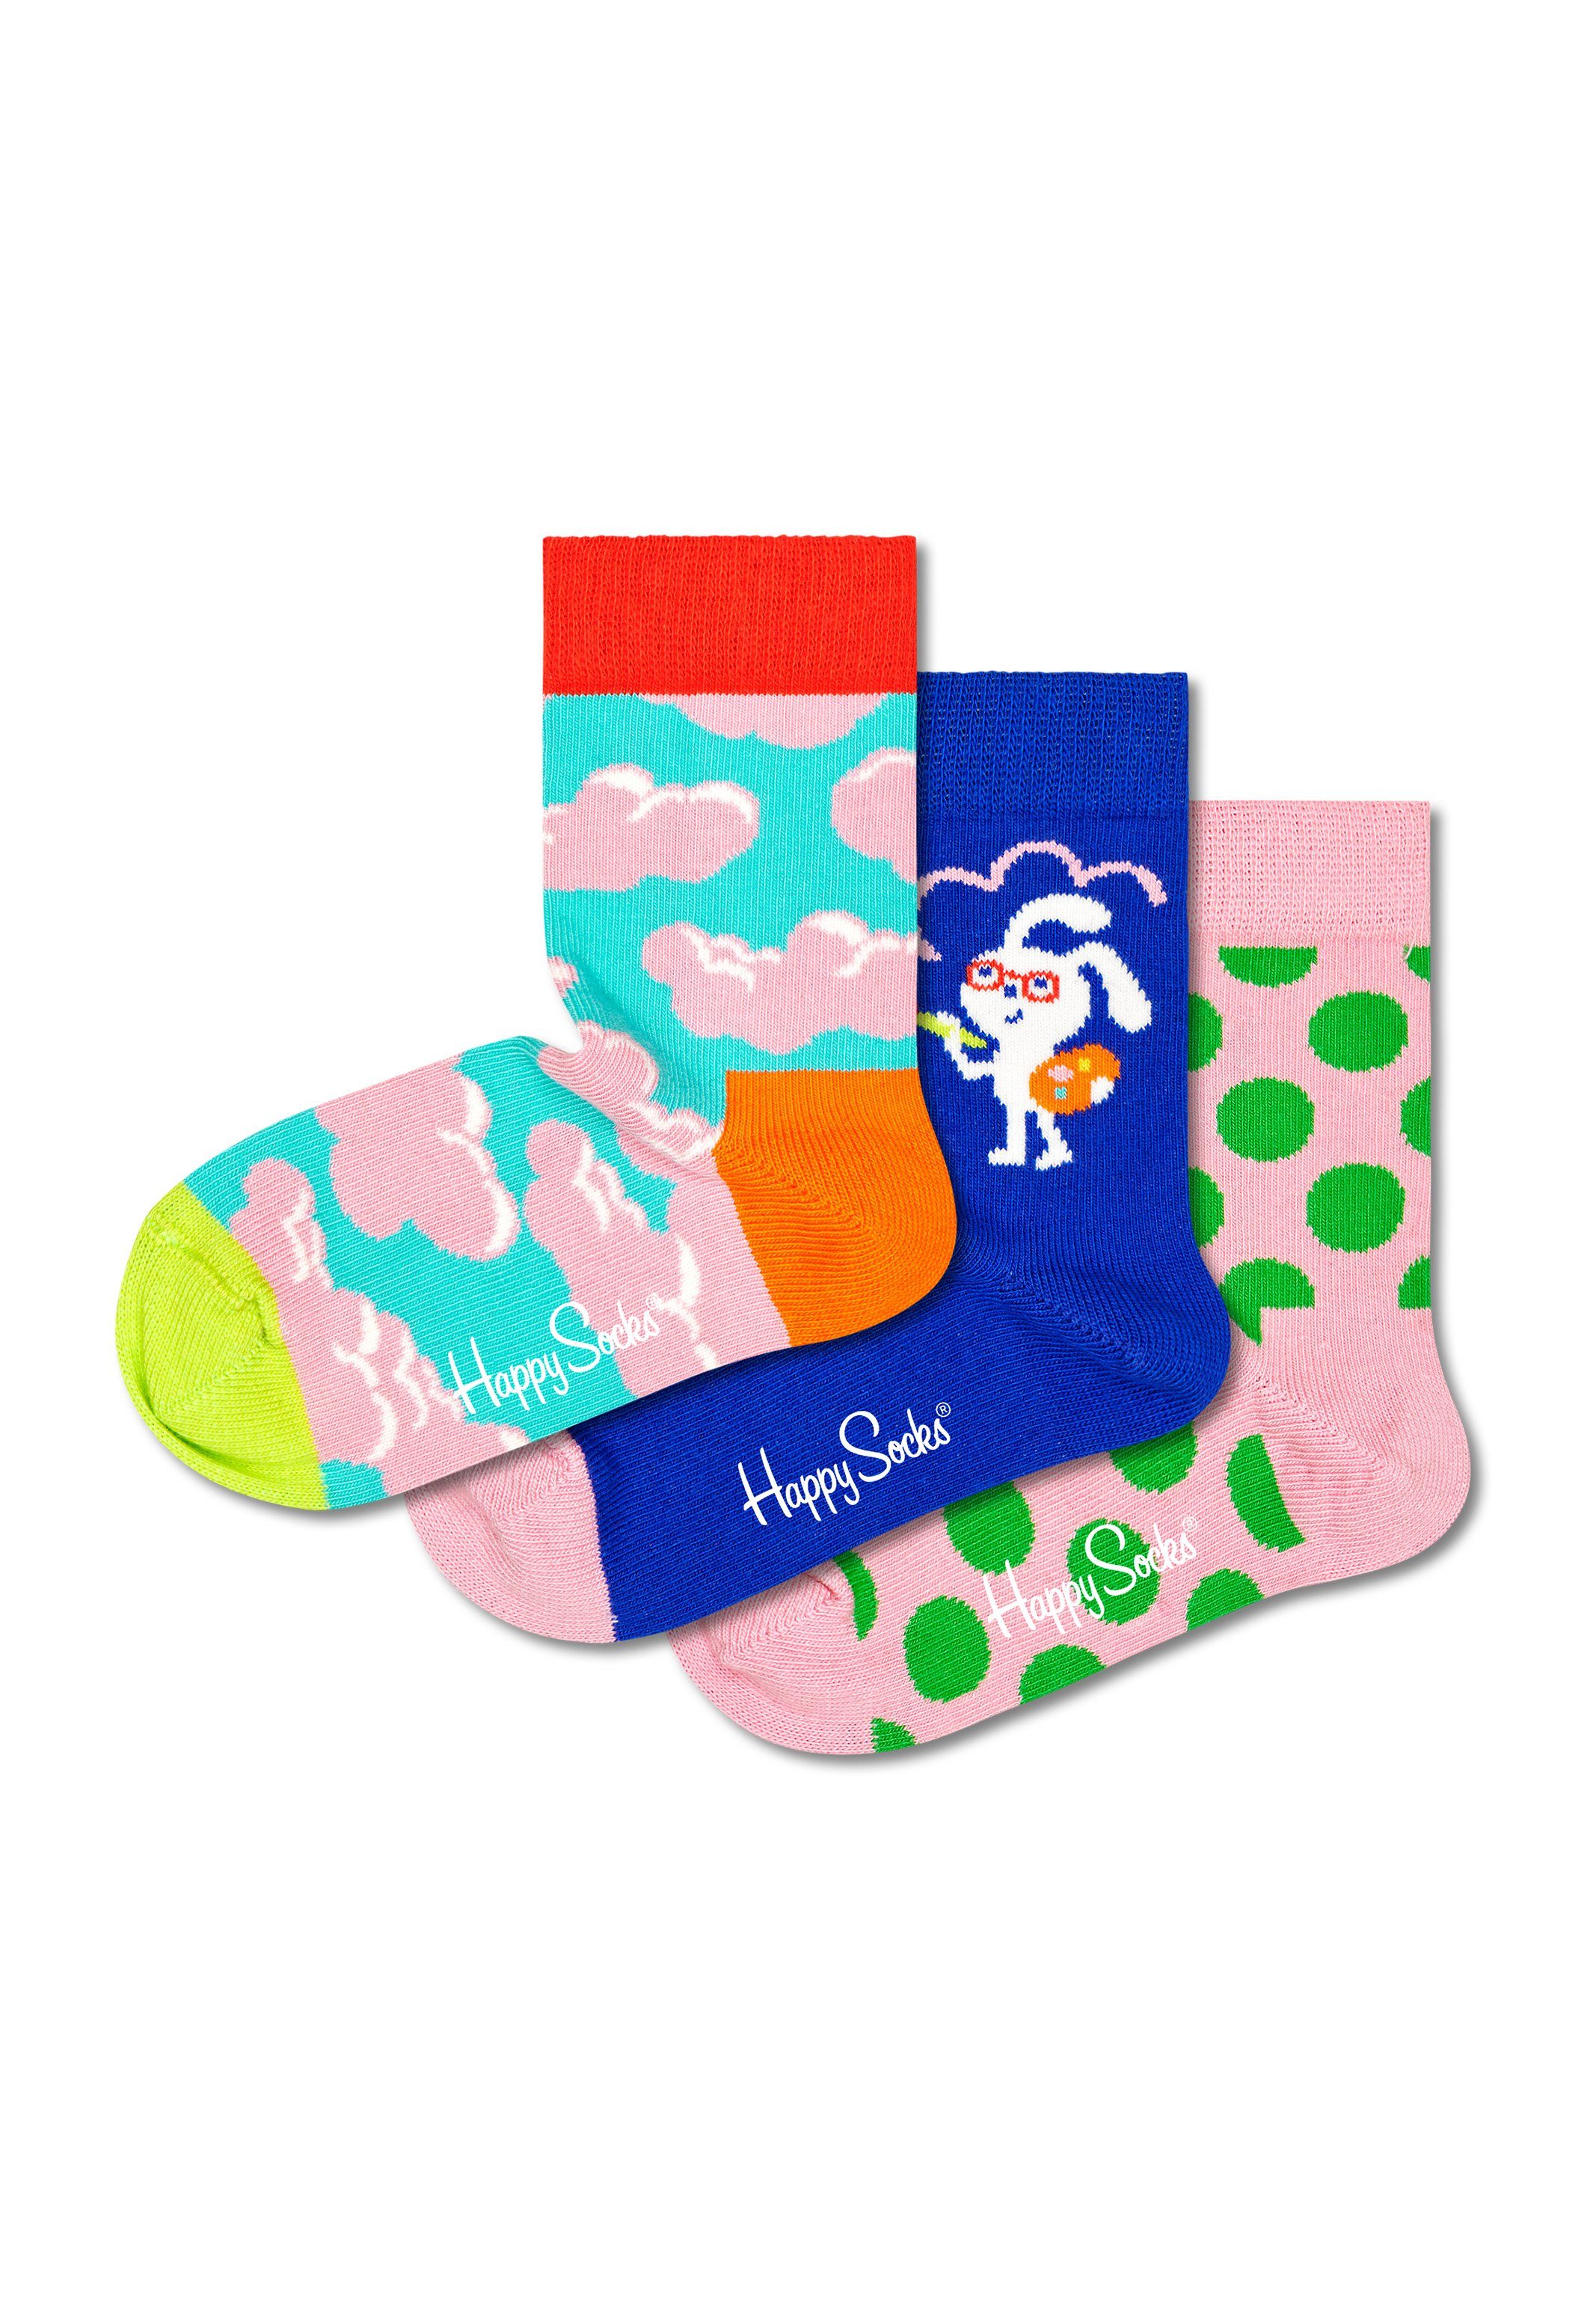 Happy Socks Langsocken Kids Over The Rainbow Geschenk Box (Spar-Set, 3-Paar)  3 Paar Socken - Baumwolle - 3 Paar bunte Socken in einer Geschenkbox, Jedes  Paar zeigt unterschiedliche Muster und Farben